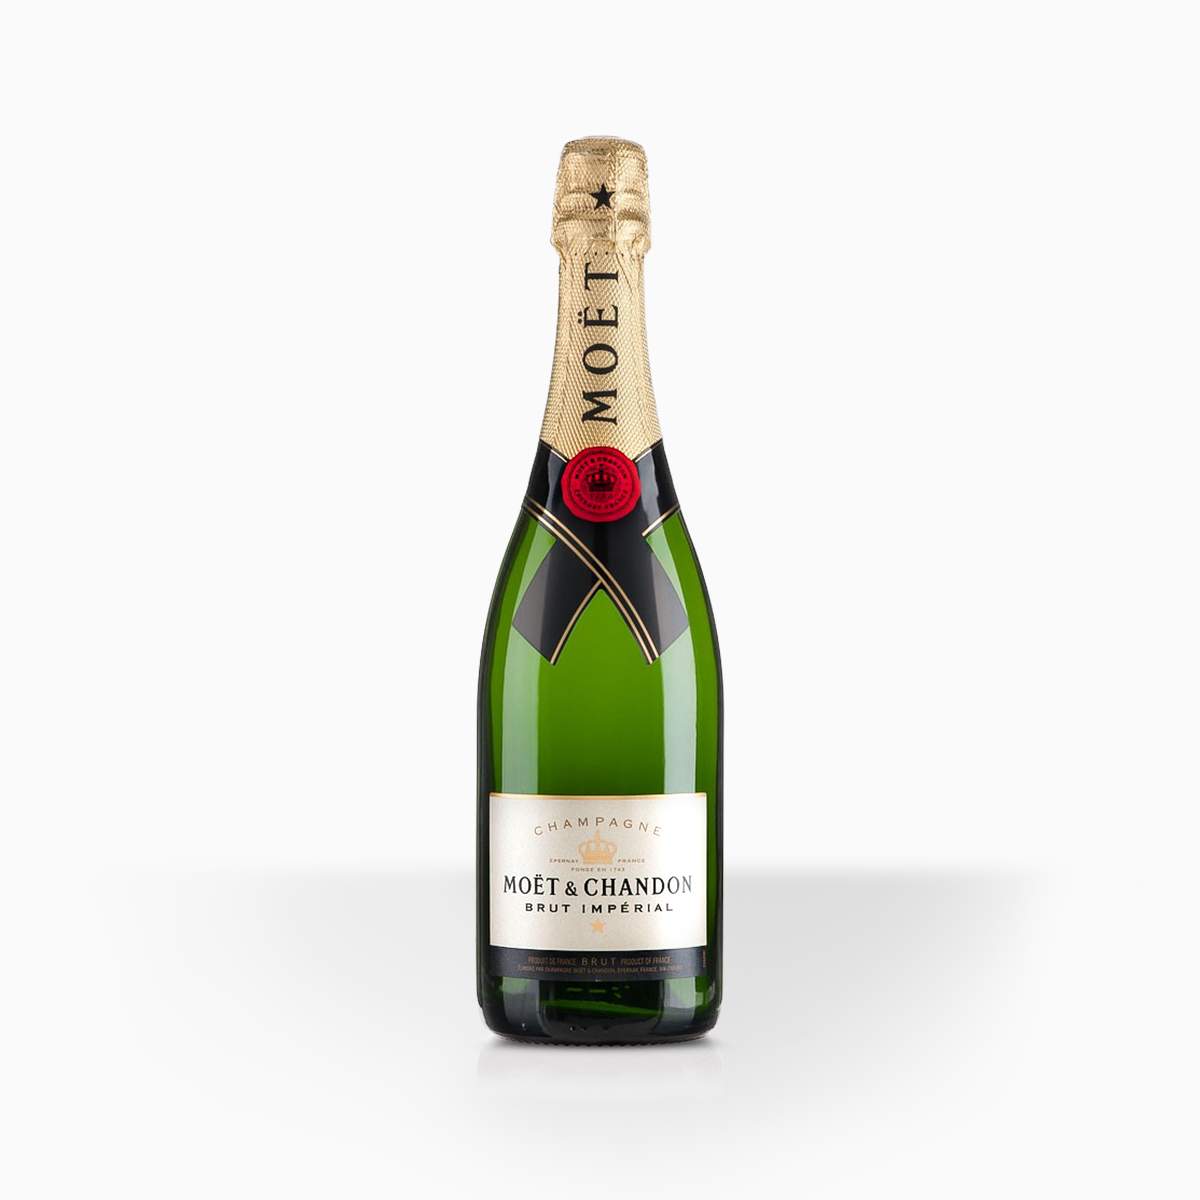 Šampanské Moet & Chandon Brut Imperial 12% 0,75l